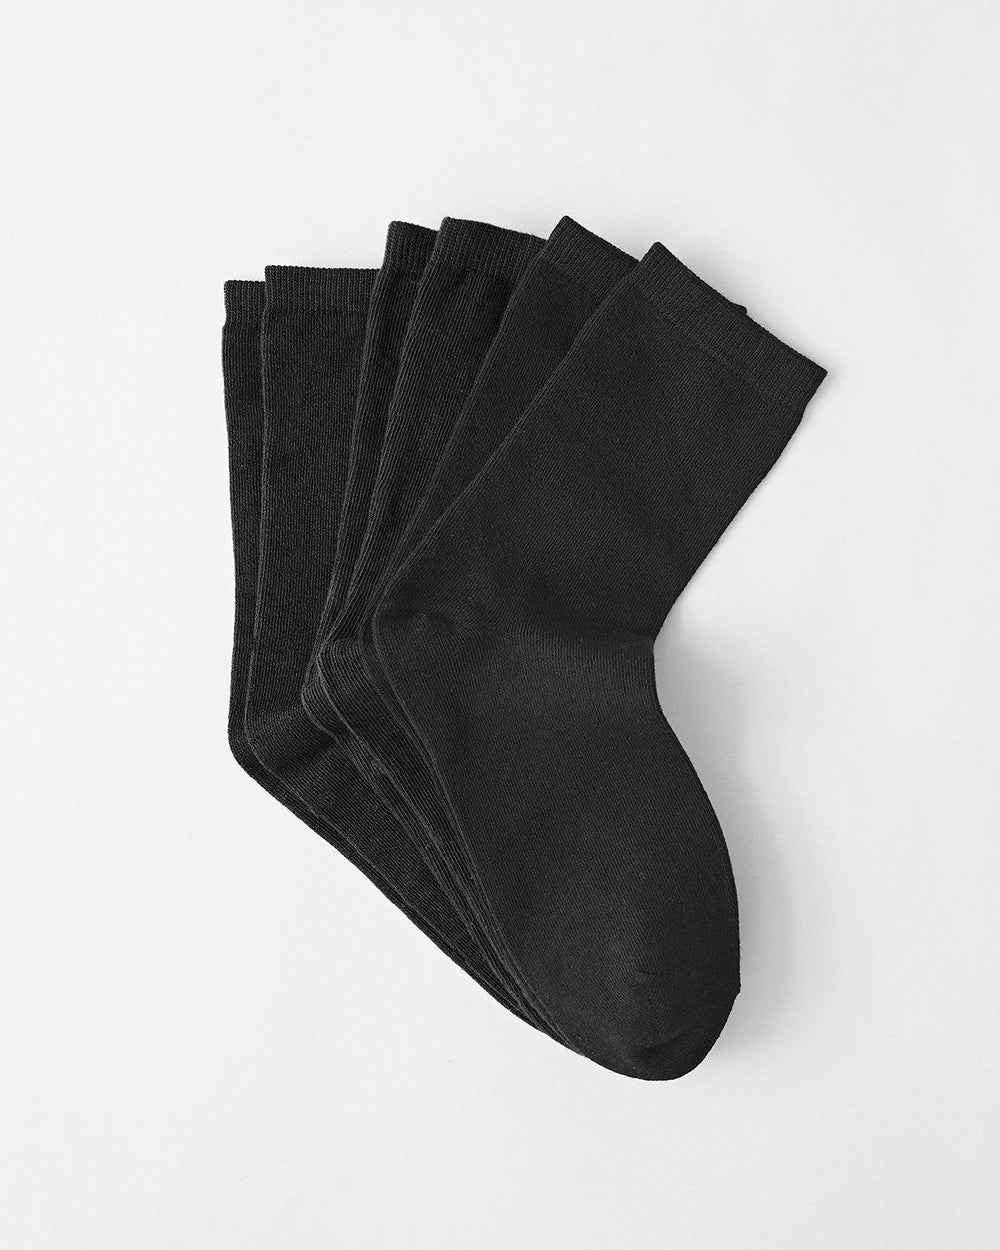 Biodegradable Socks 3 Pairs - Jet Black Stripe & Stare